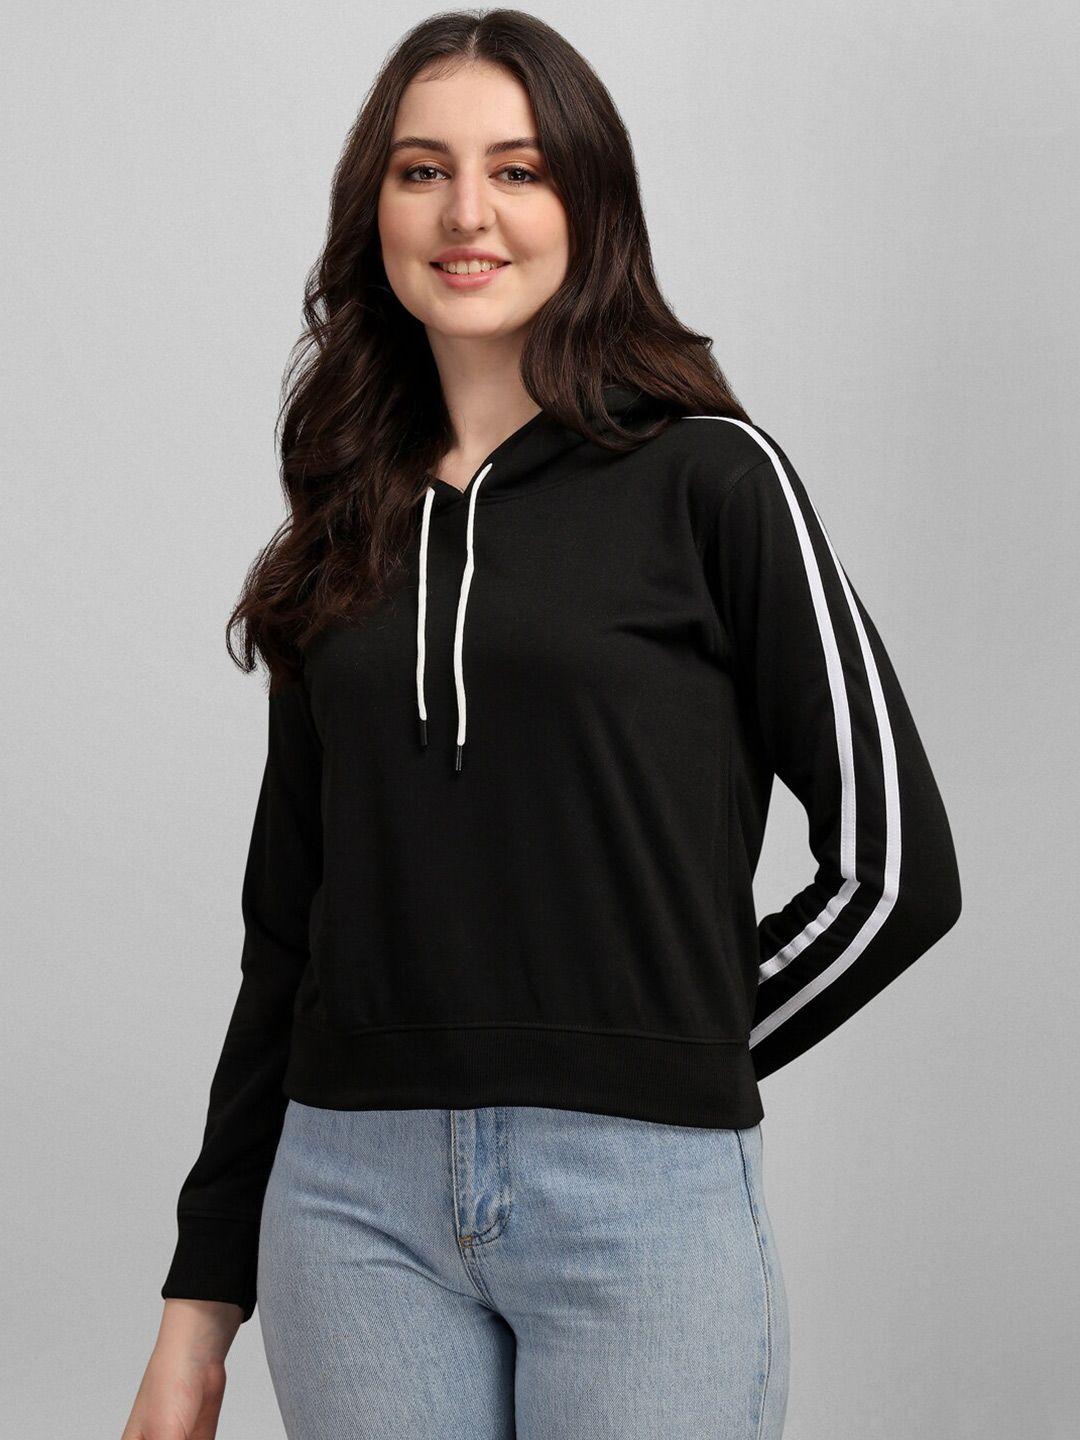 selvia women black & white solid hooded sweatshirt